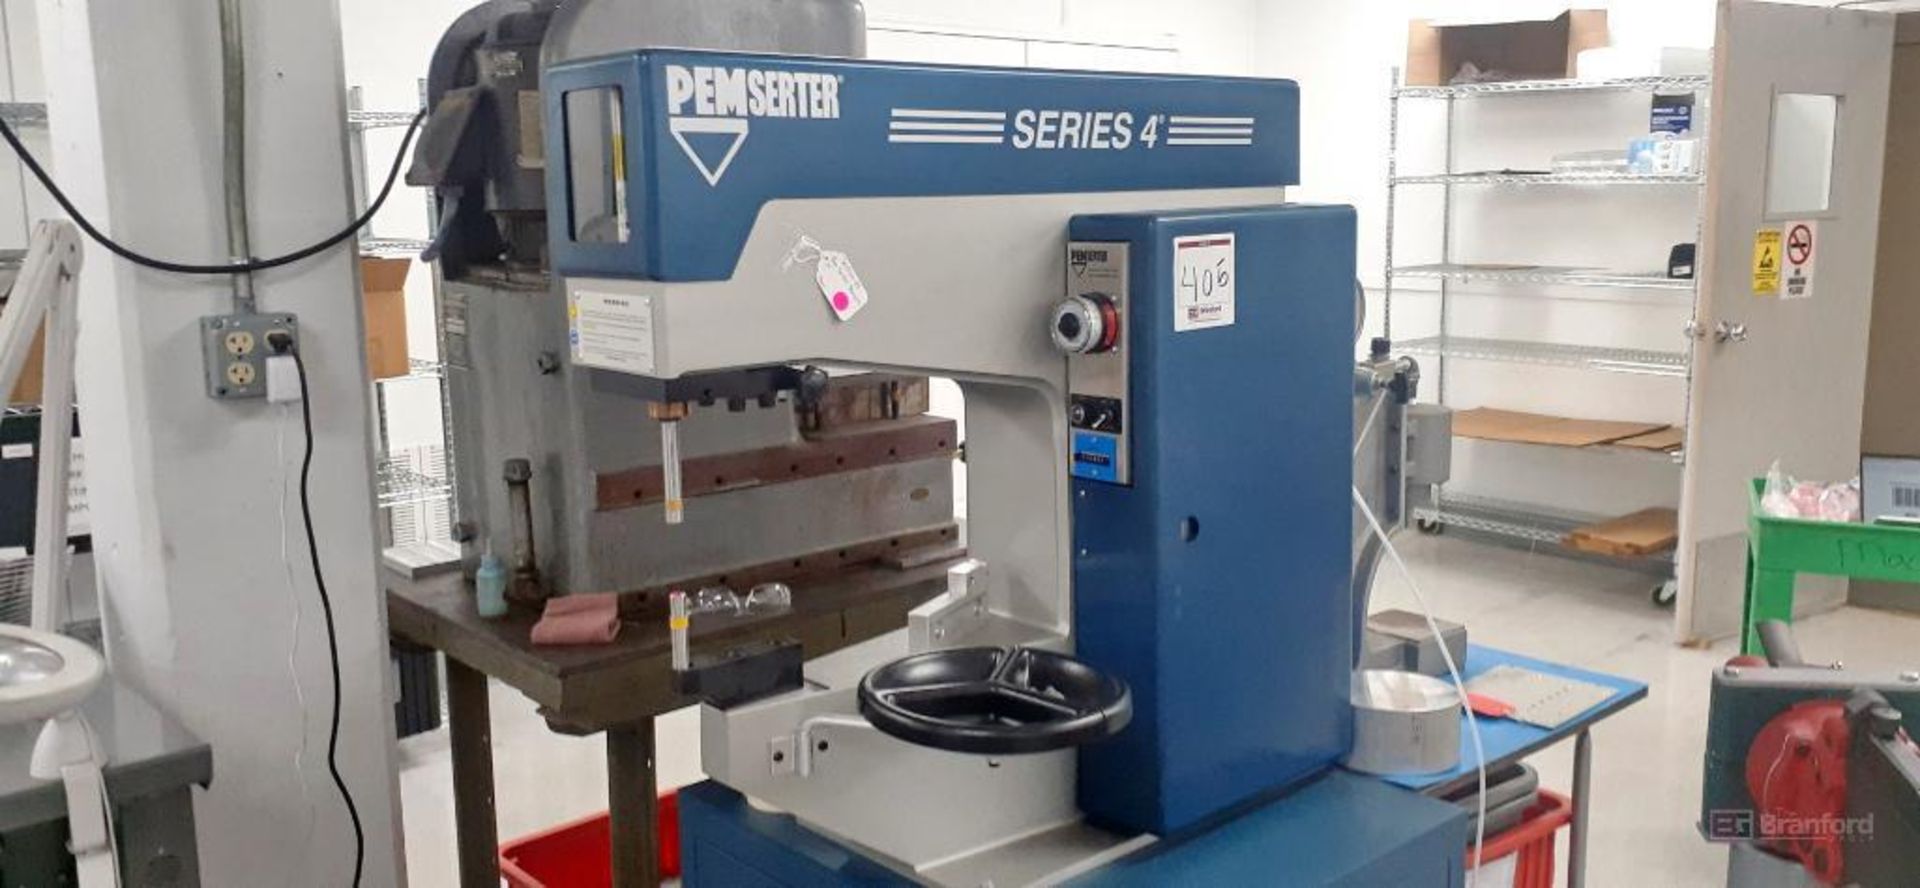 Penn Engineering Model Pemserter M4 Series 4, 6-Ton Pneumatic Insertion Press - Image 2 of 7